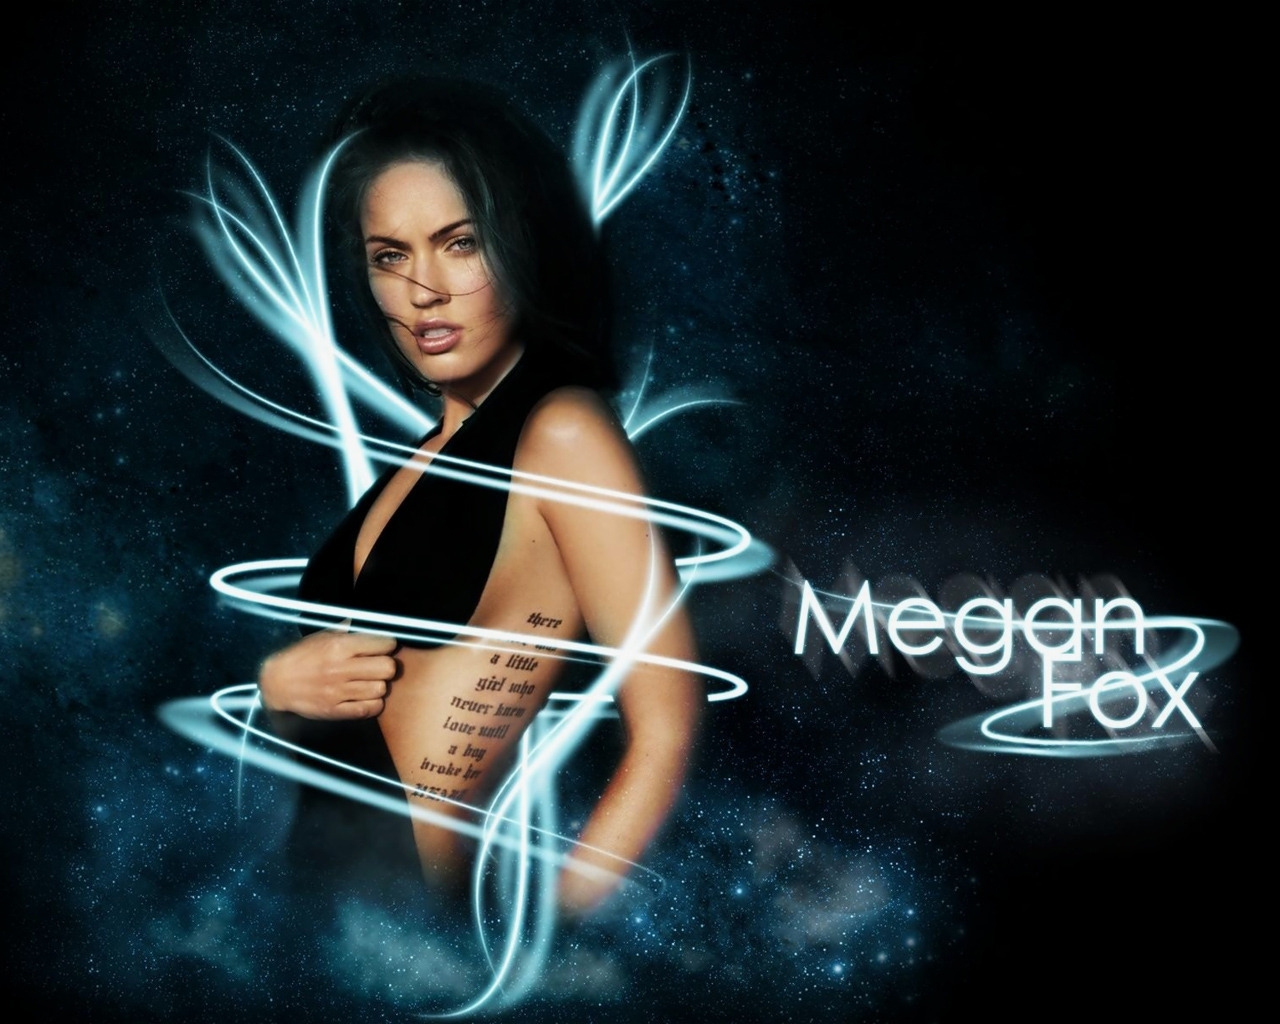 Megan Fox Between Light for 1280 x 1024 resolution